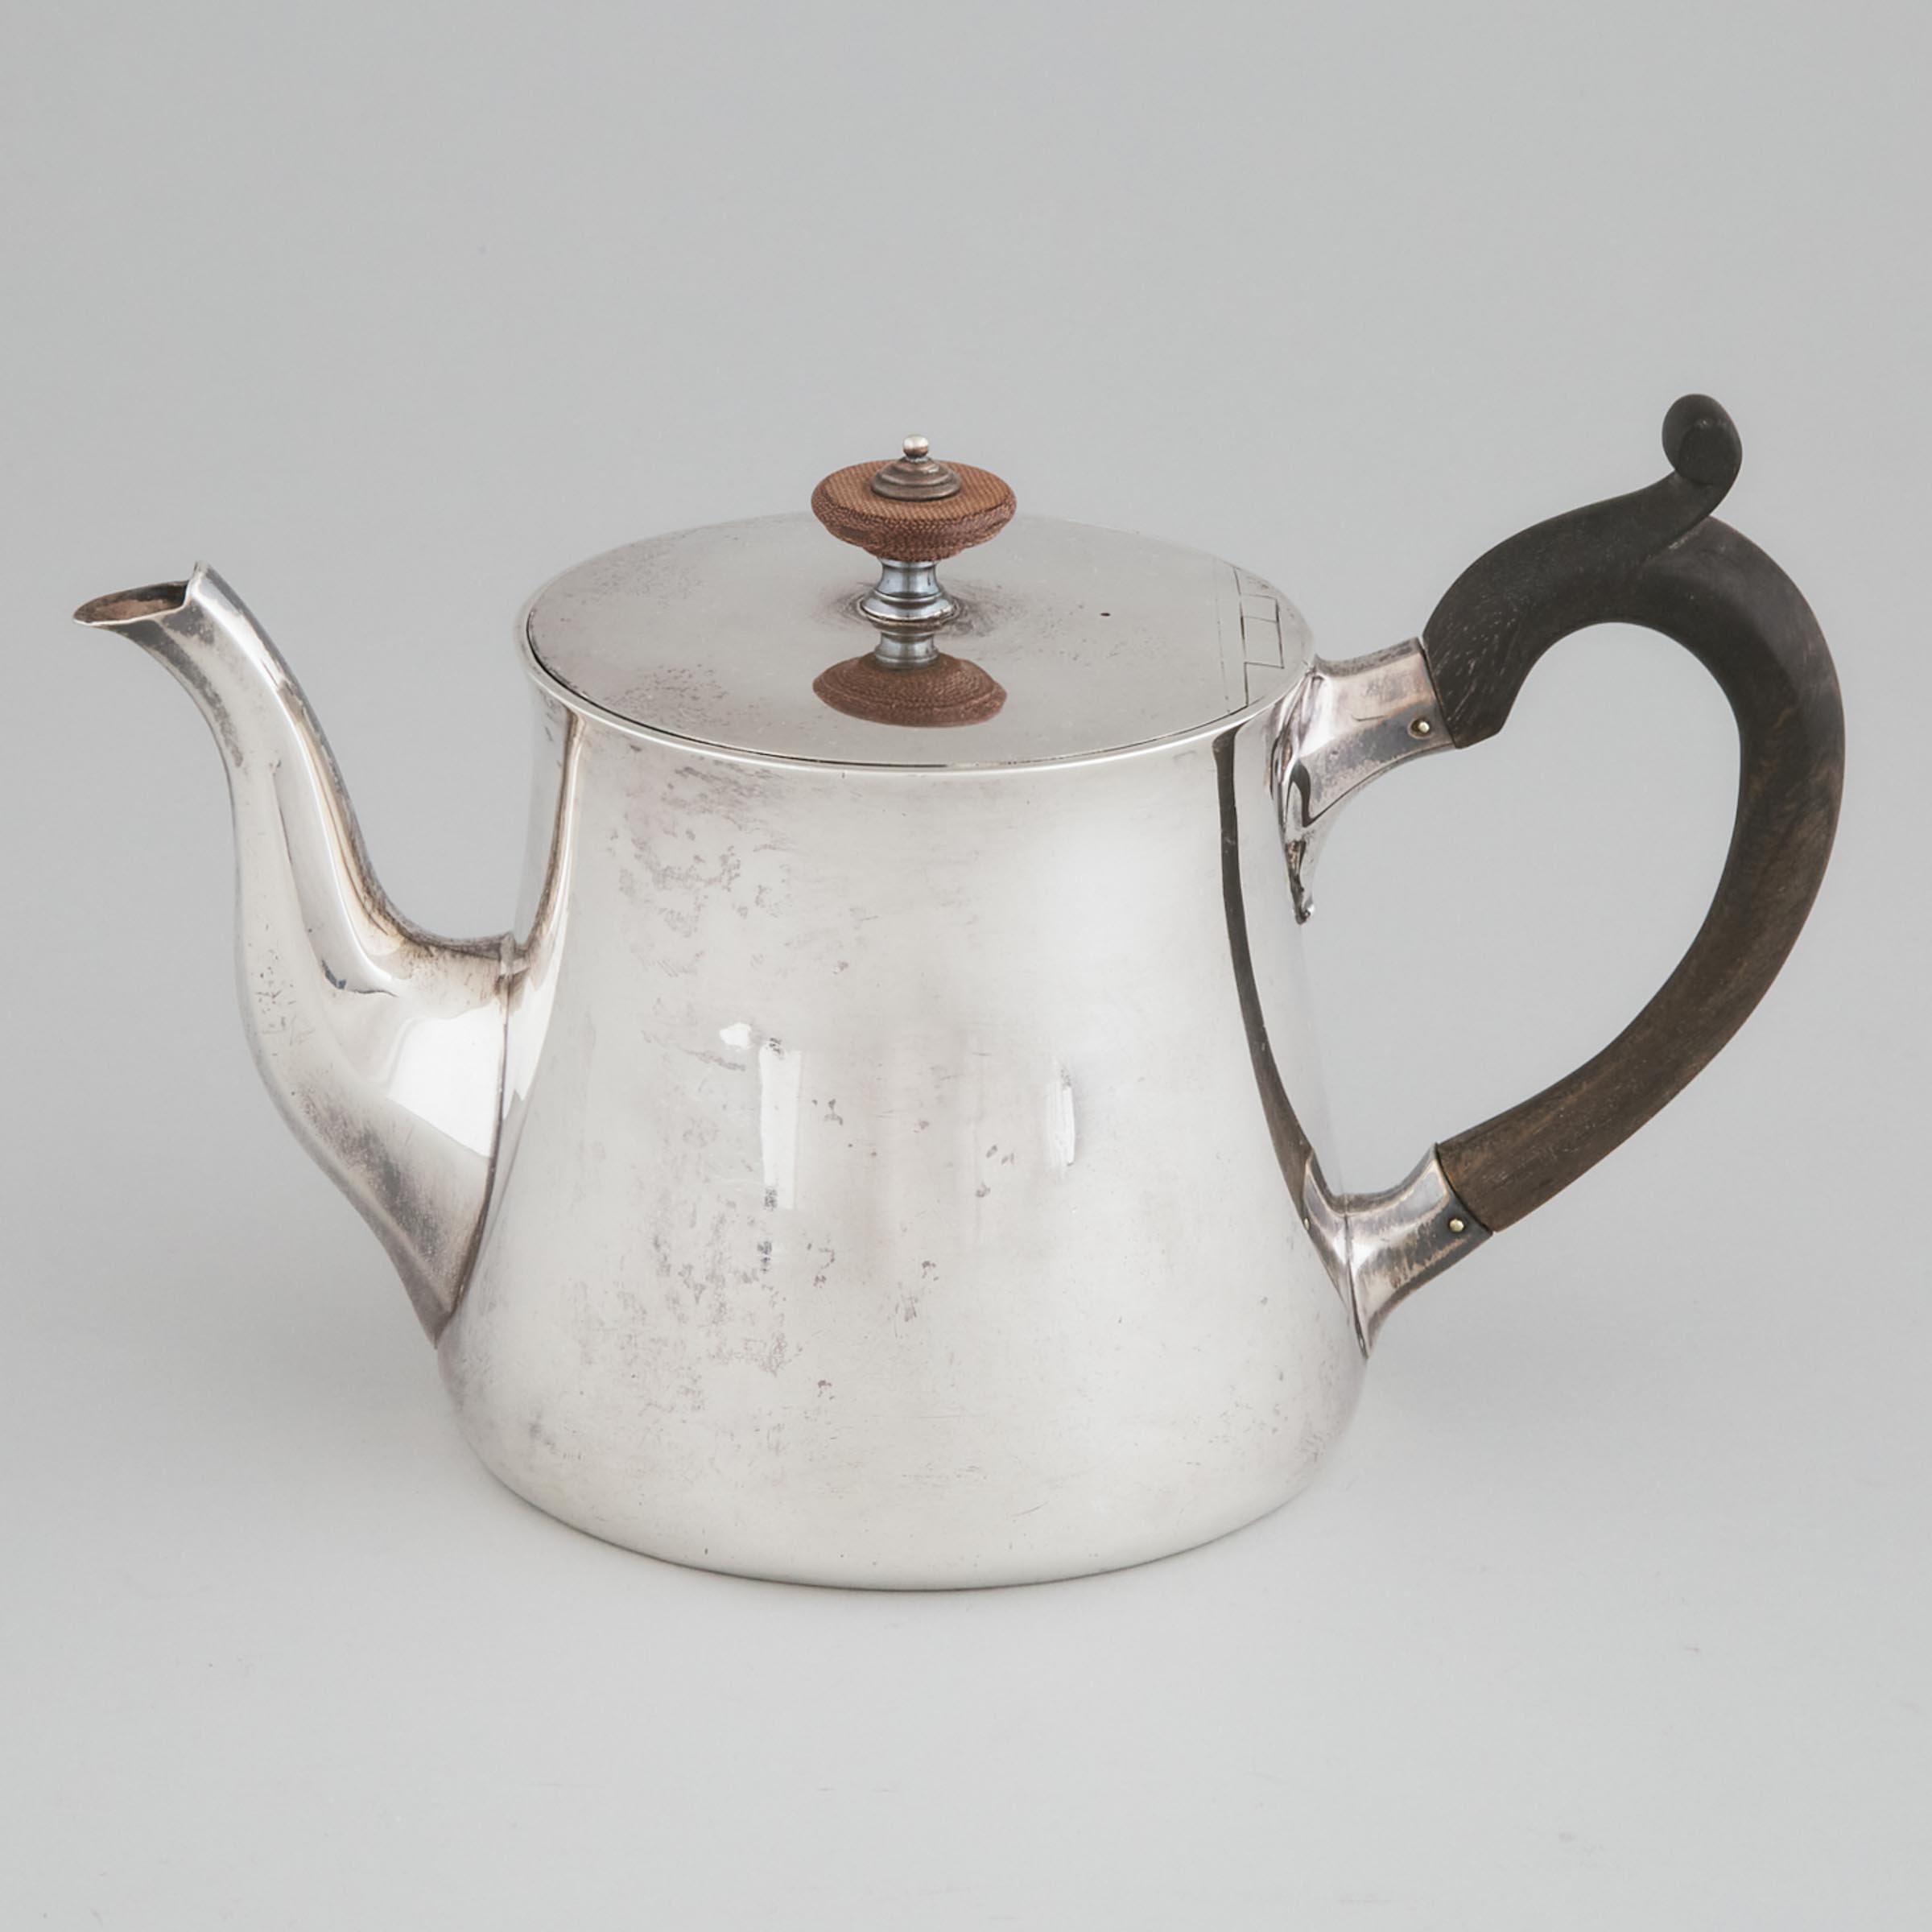 George IV Silver Teapot, Robert Garrard, London, 1827